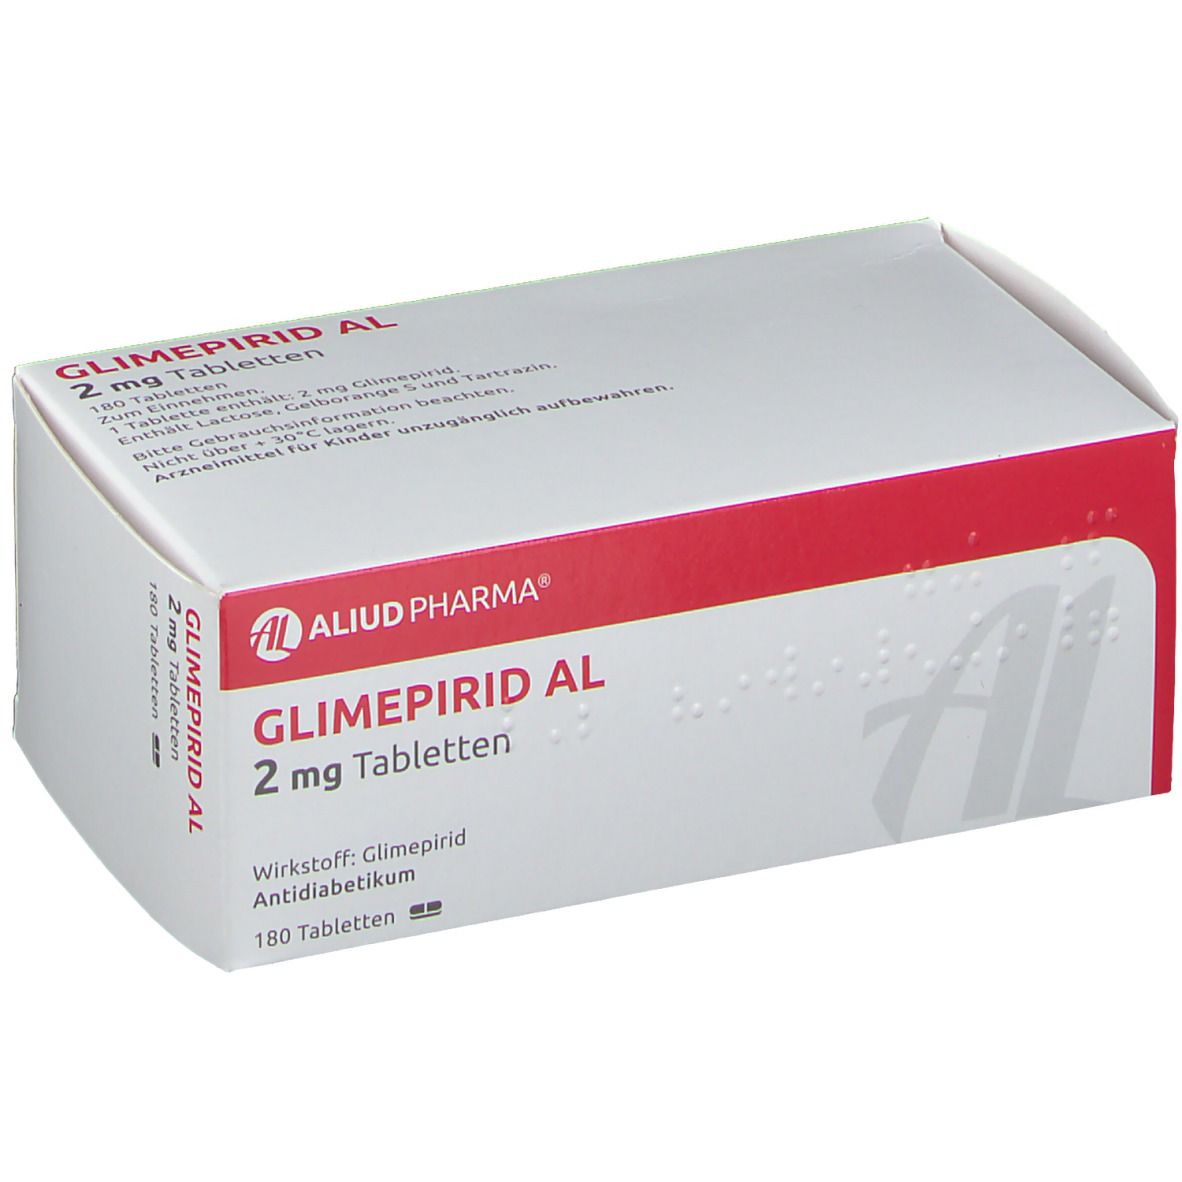 Glimepirid AL 2 mg